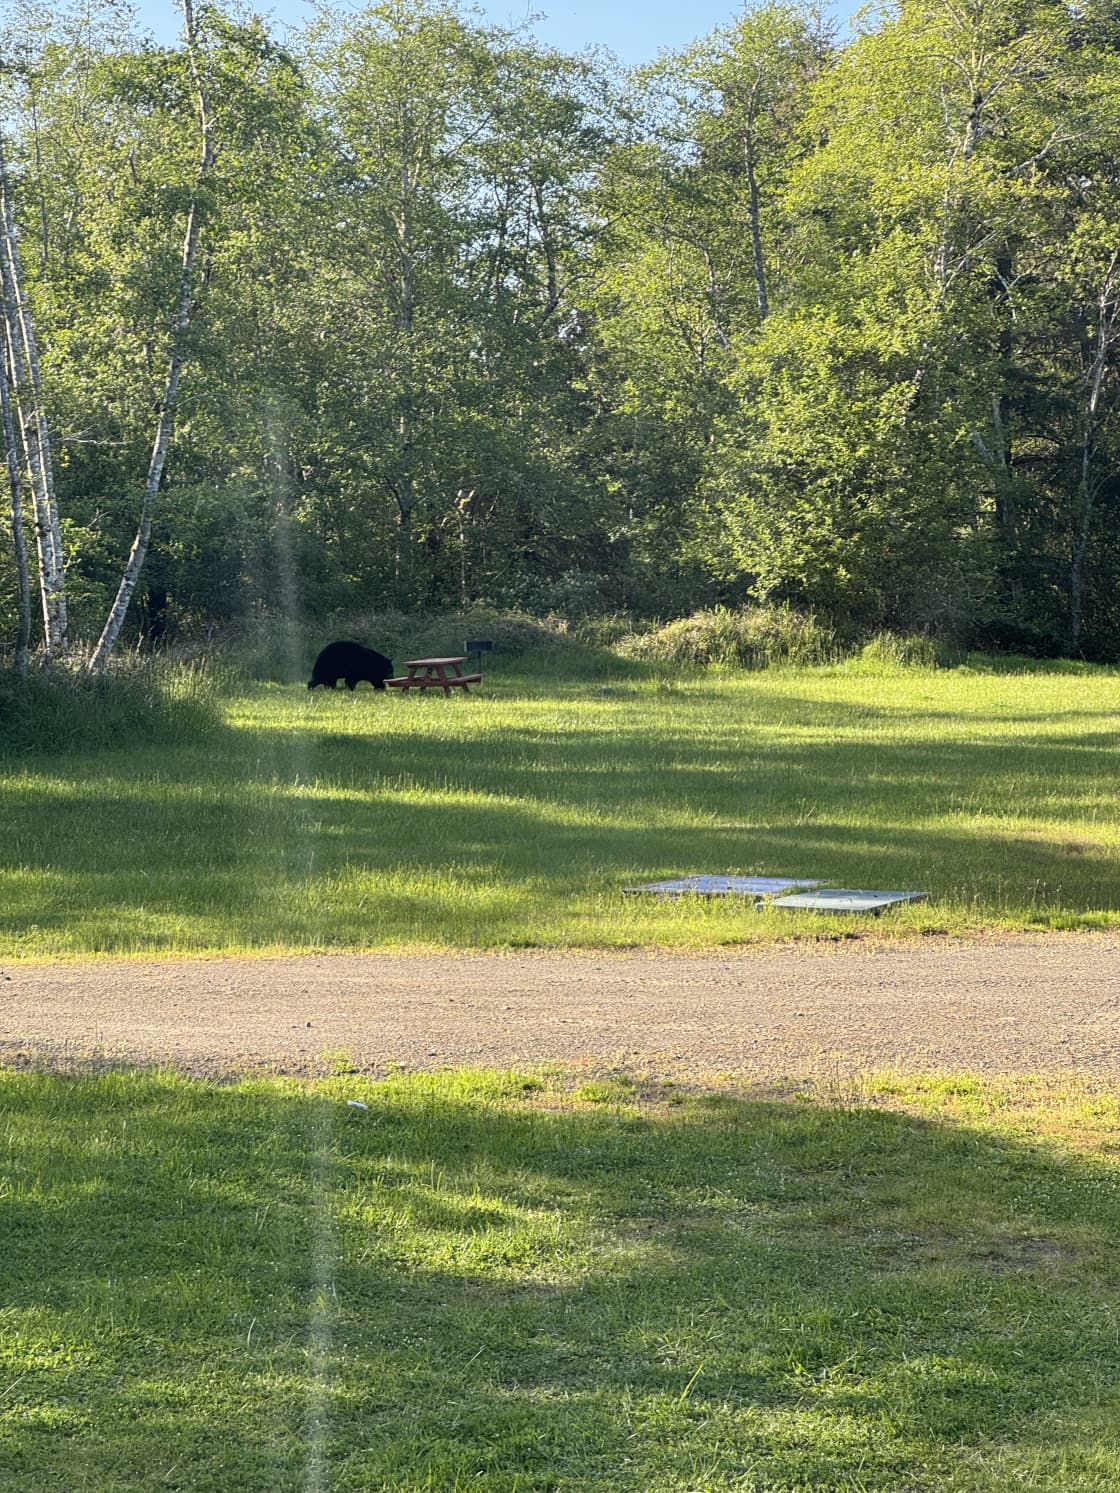 Big black bear. It was more afraid of us. 